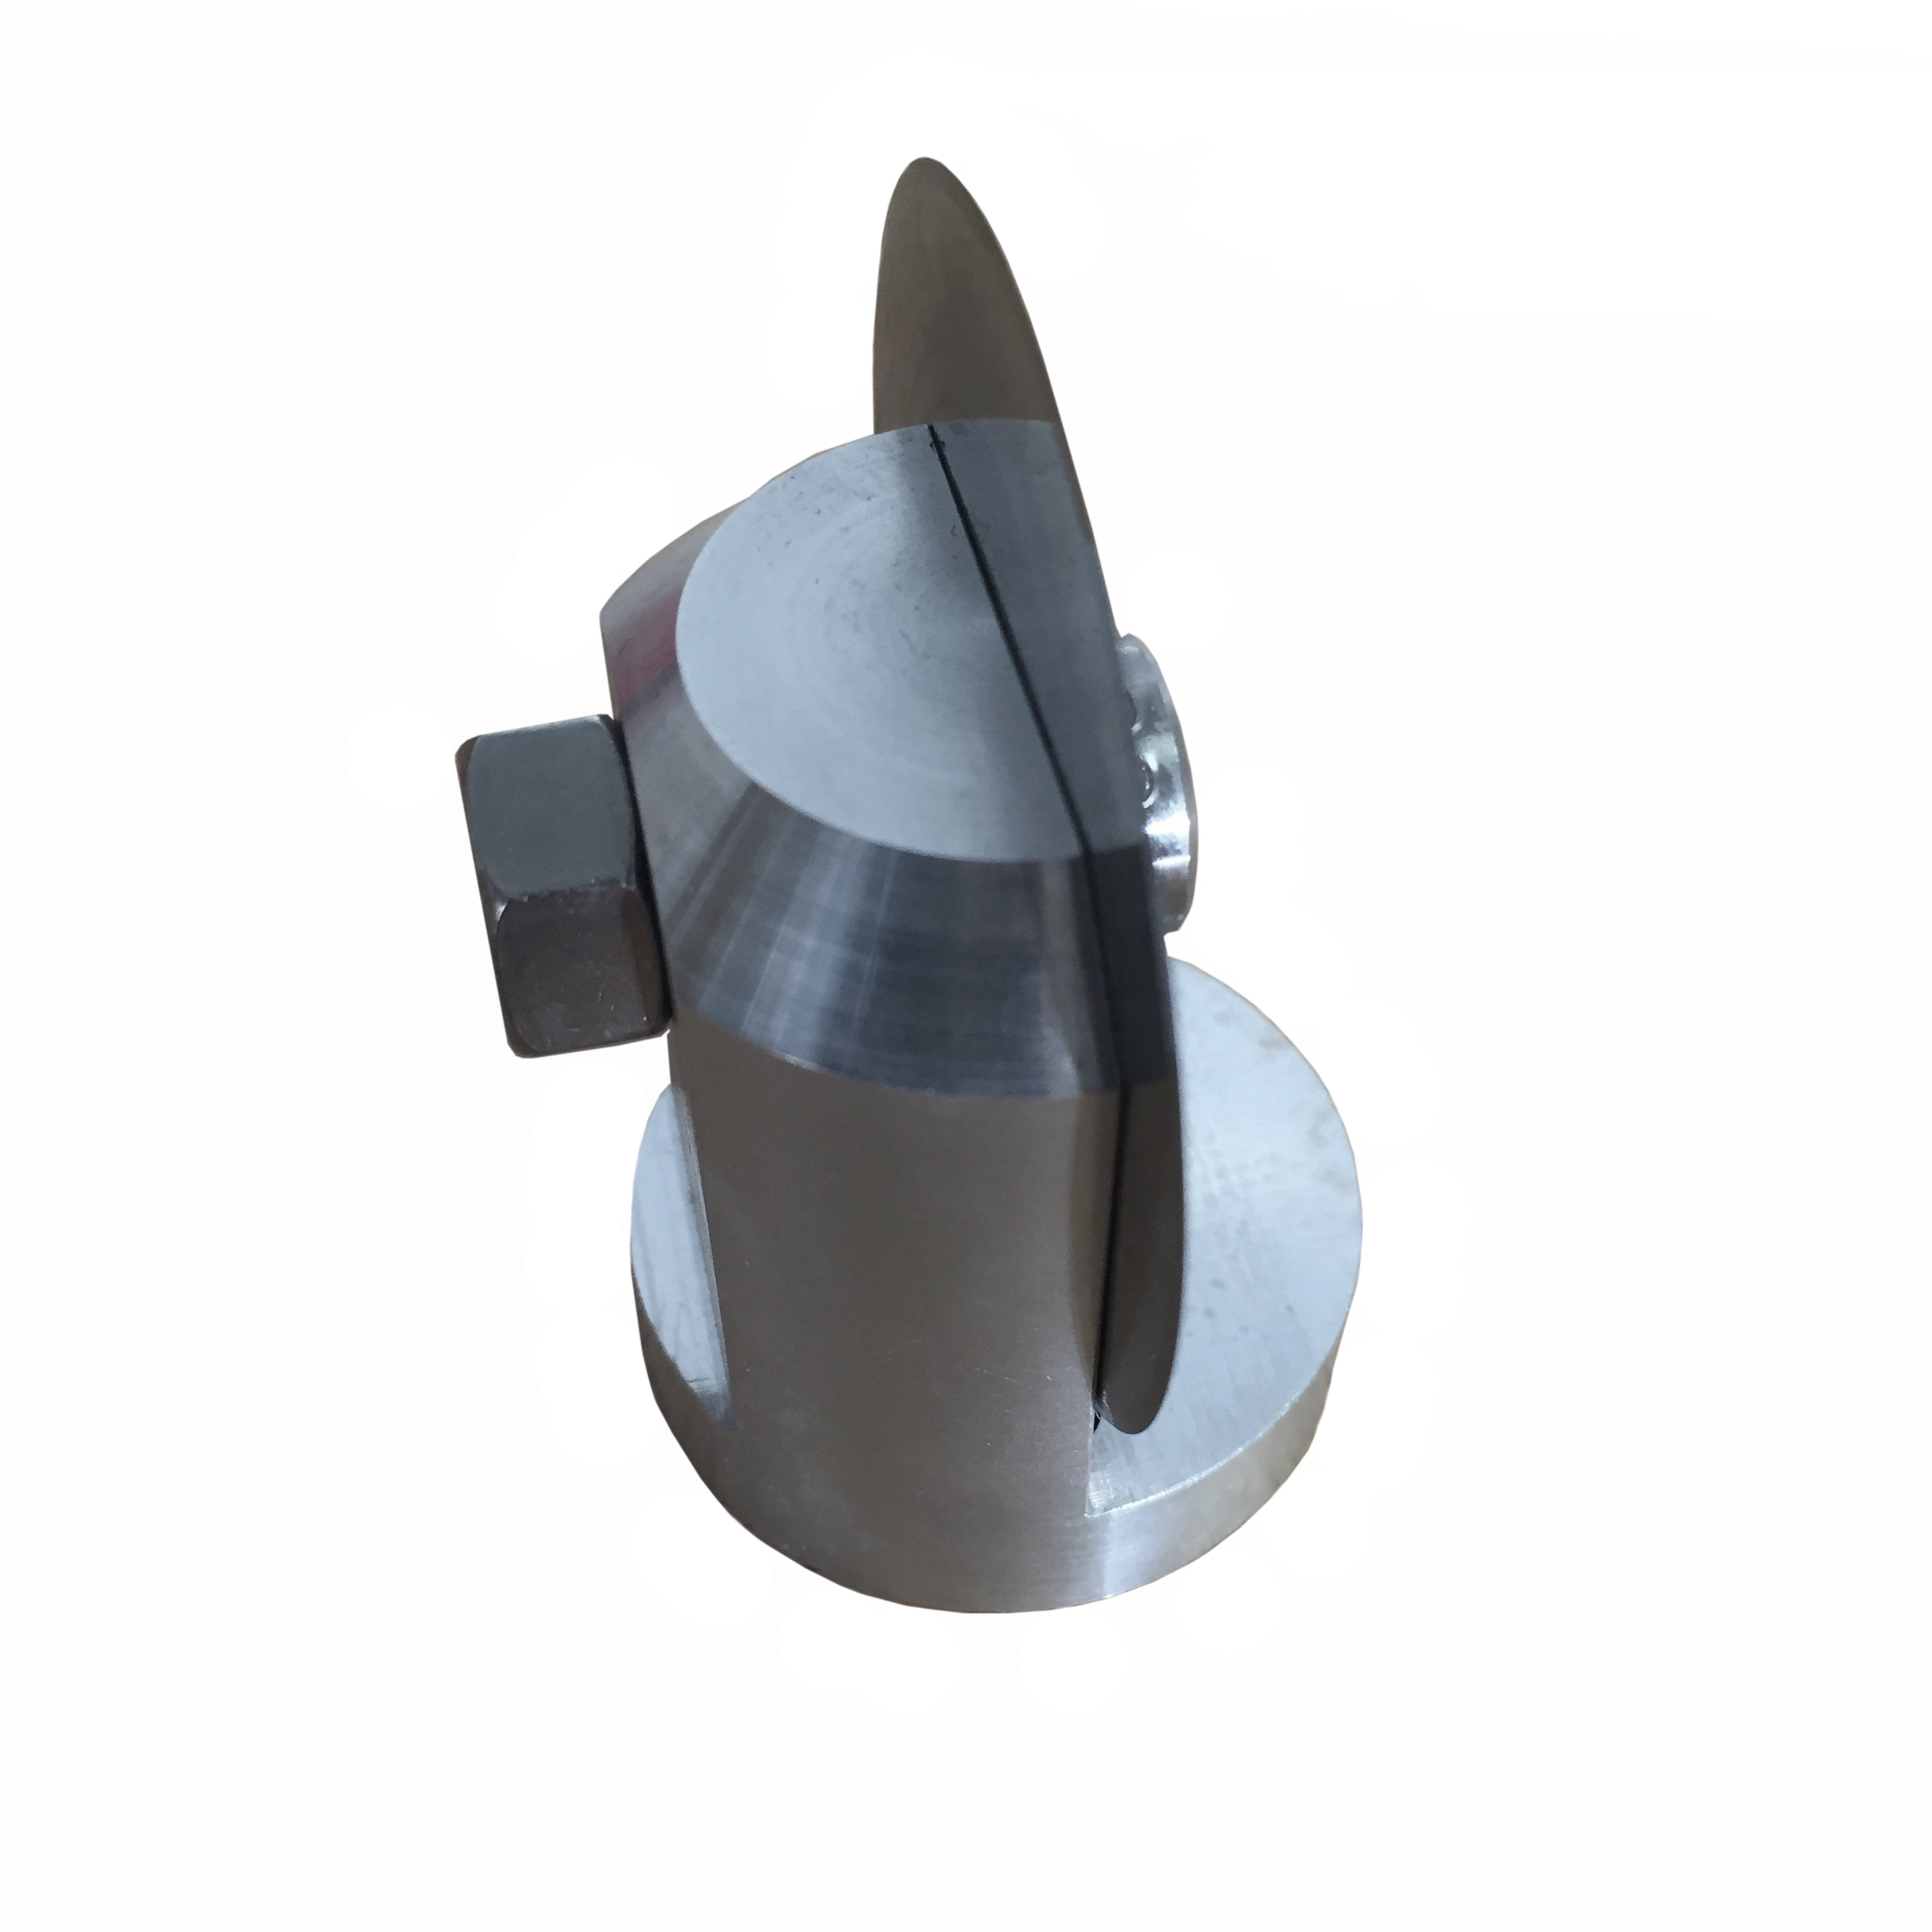 45mm side mount rotary blade holder